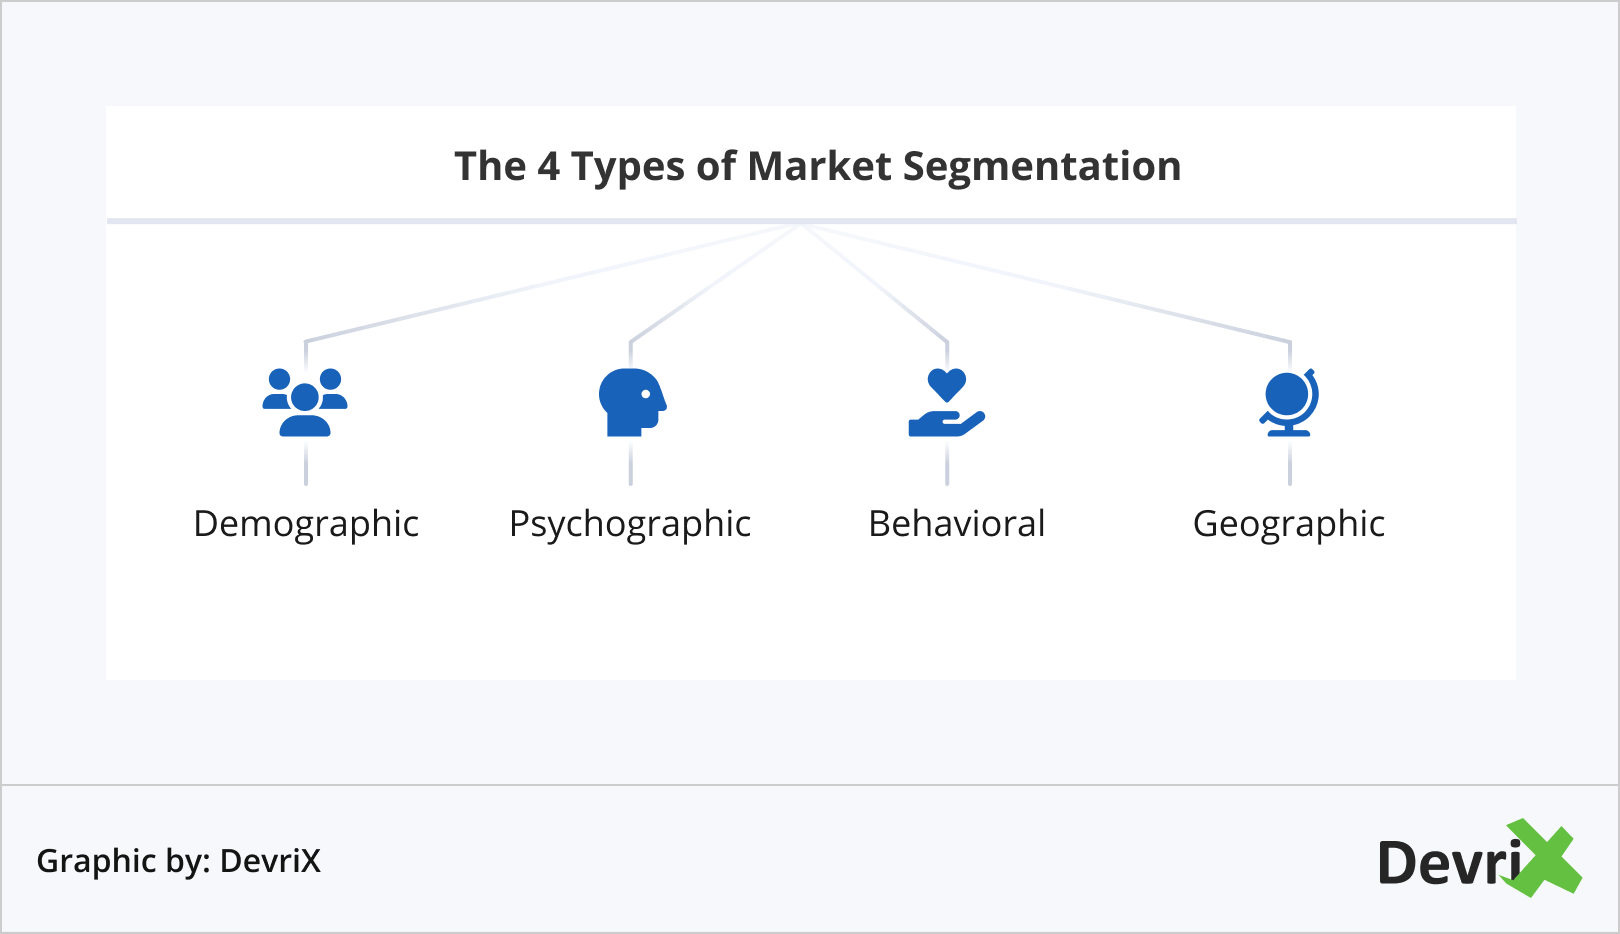 The 4 Types of Market Segmentation